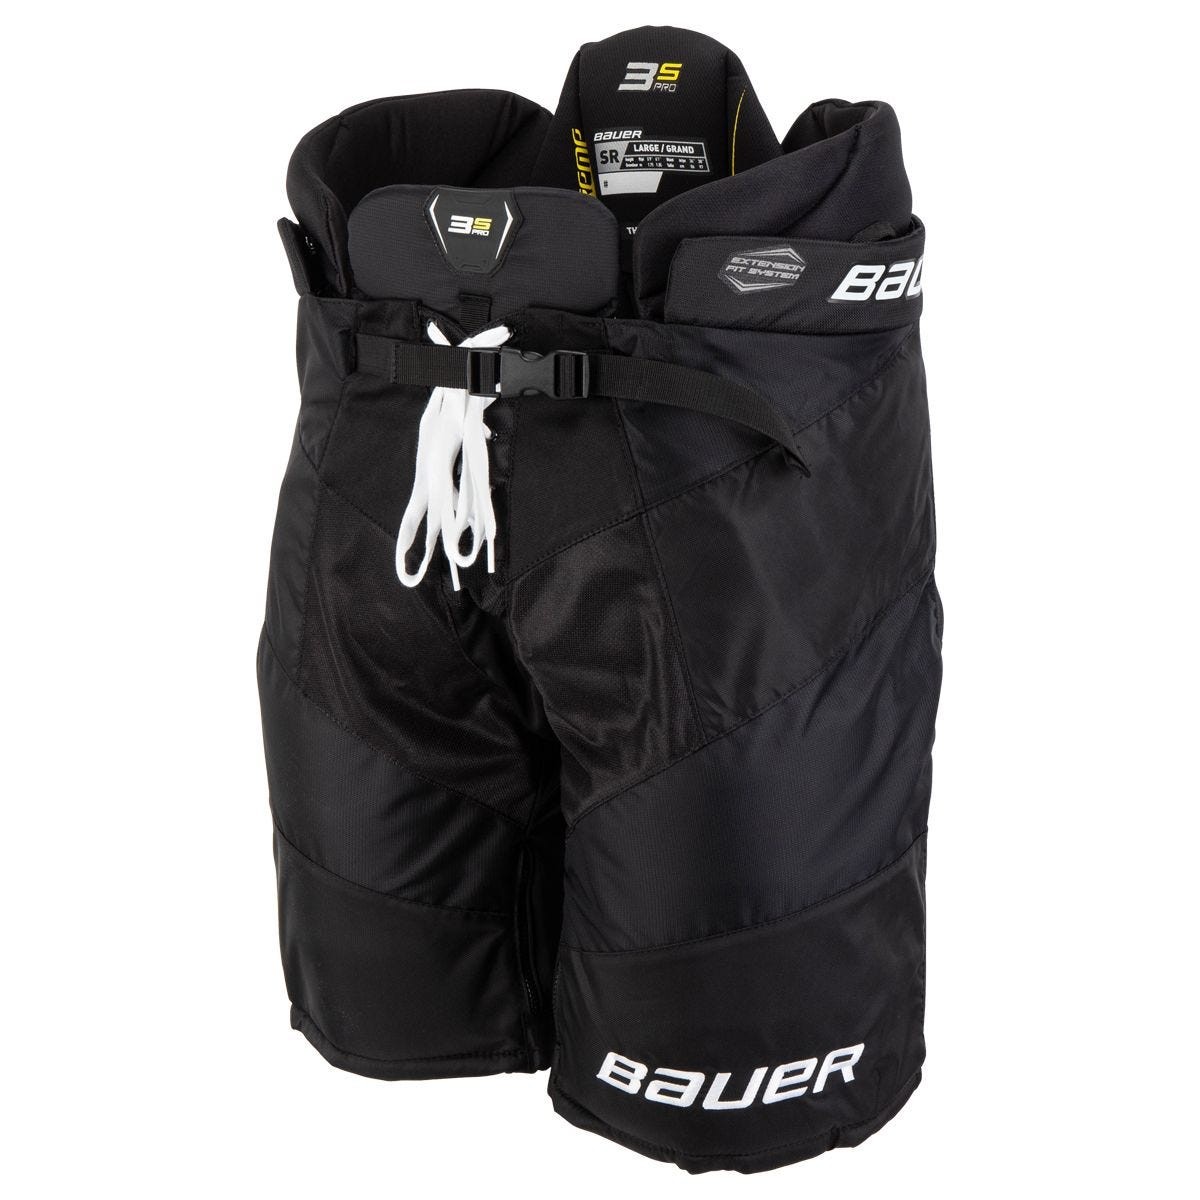 BAUER Supreme 3S Pro S21 Senior Ice Hockey Pants